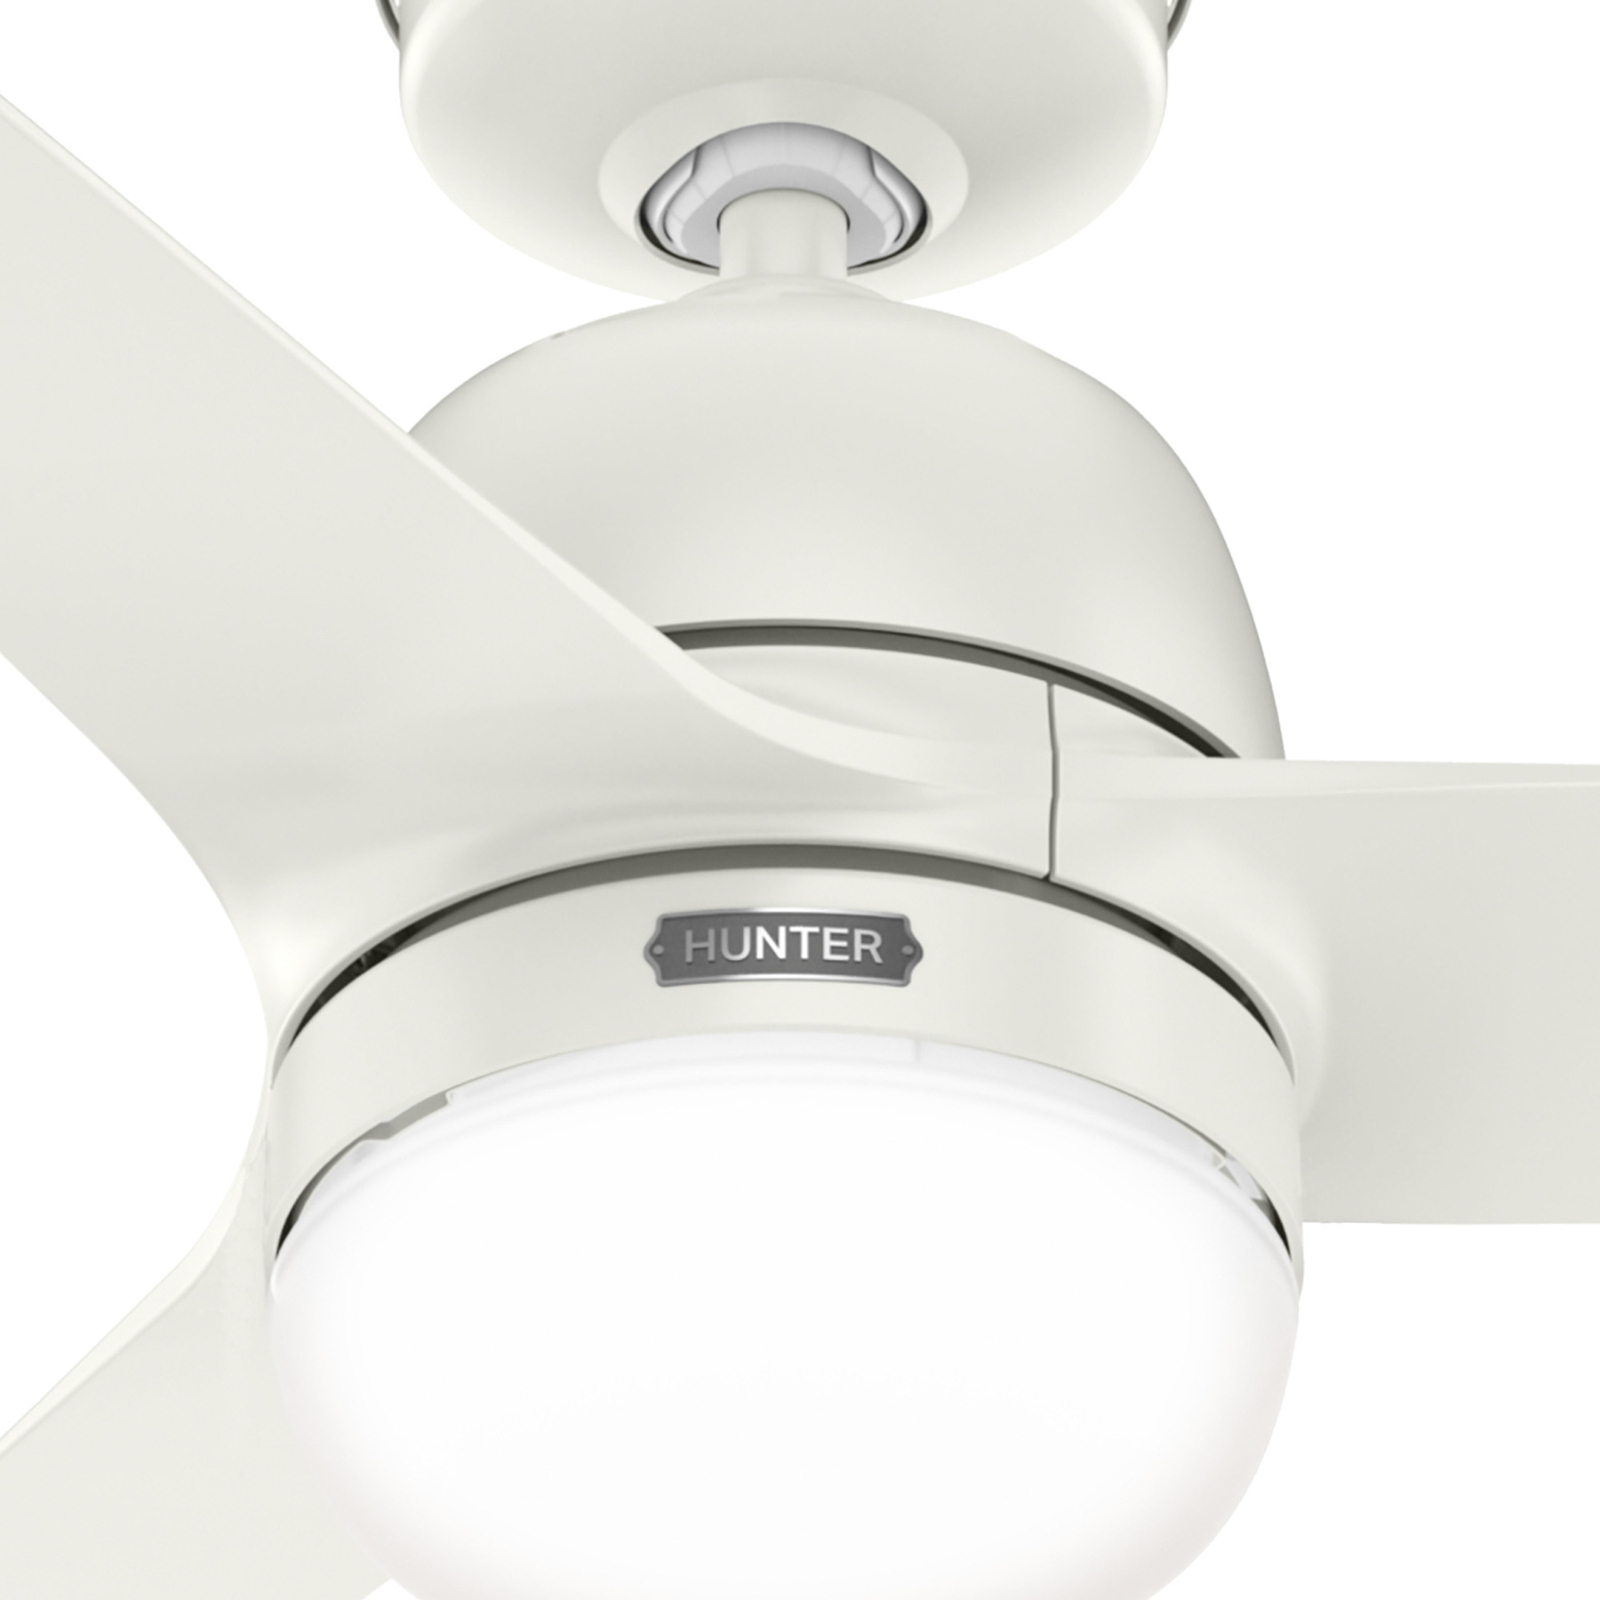 Hunter SeaWave AC ventilátor světlo IP44 bílá